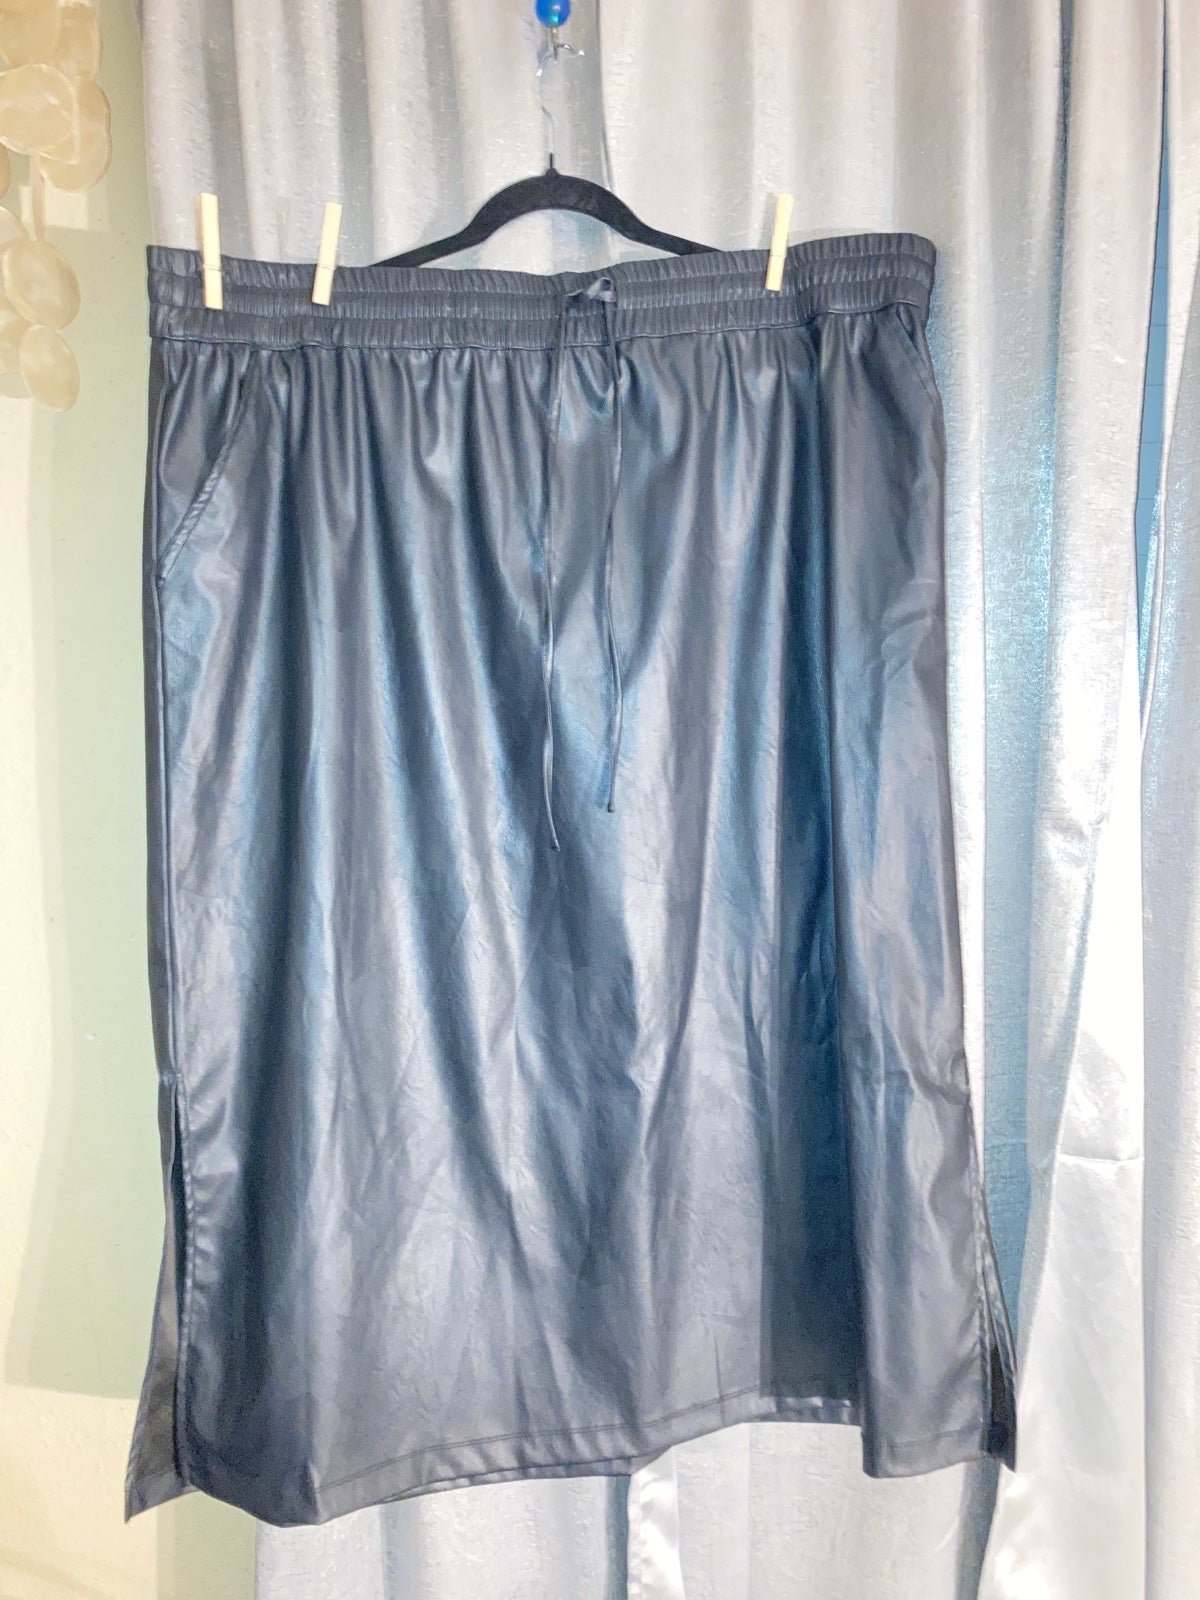 The Best Seller Black Faux Leather skirt KBvOSfgyu Whol